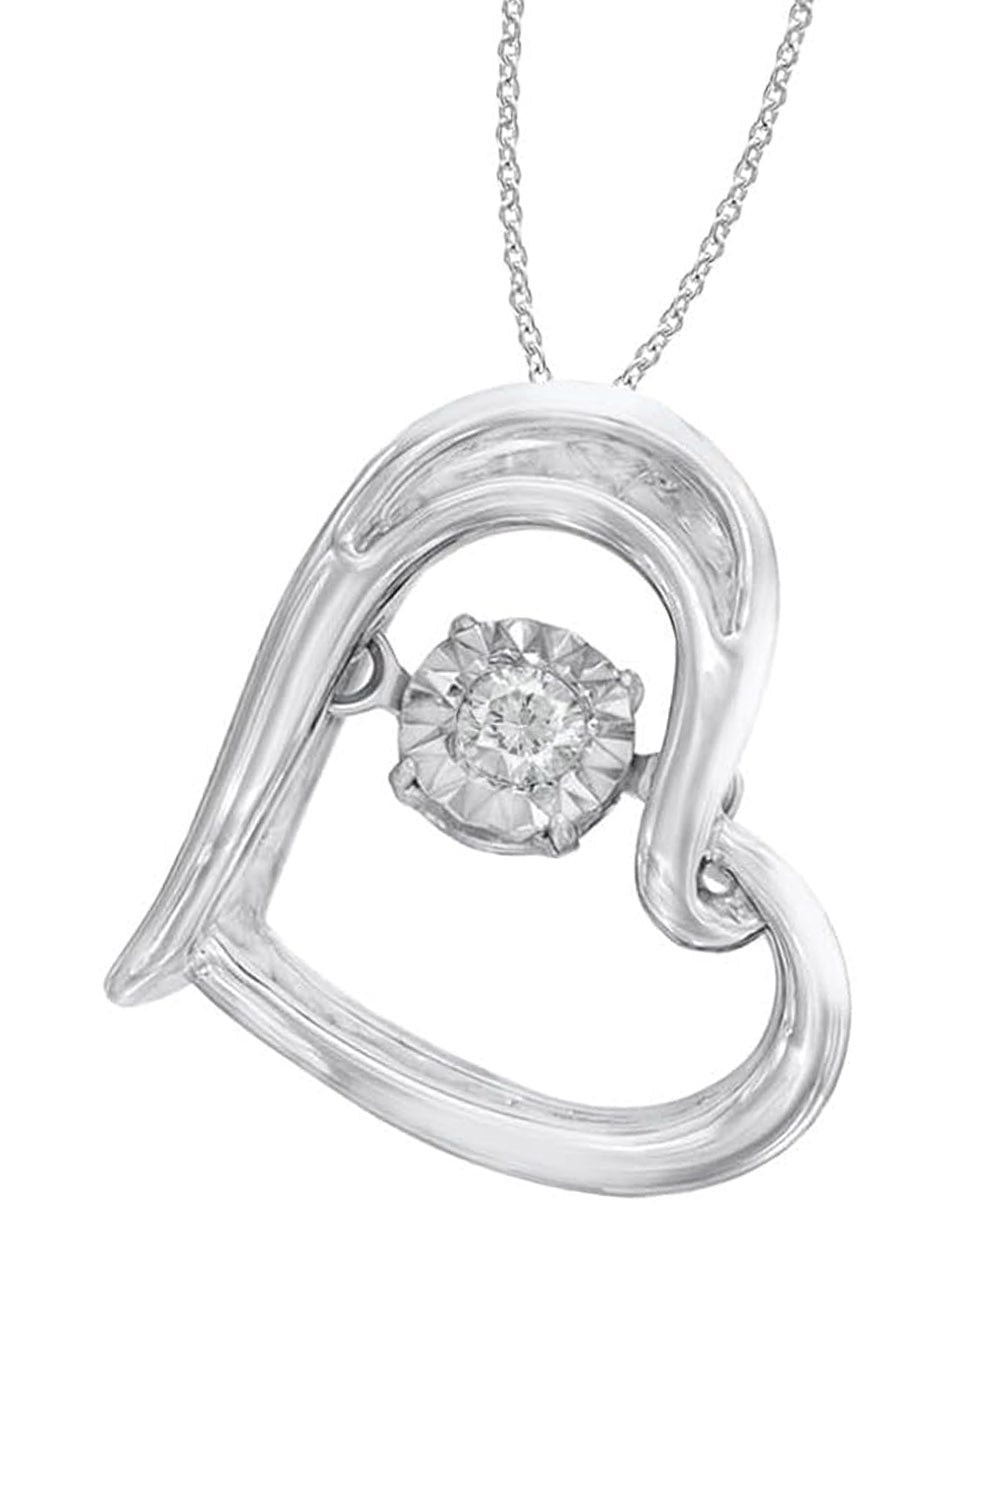 White Gold Color Moissanite Heart Pendant Necklace, Buy Pendants Online